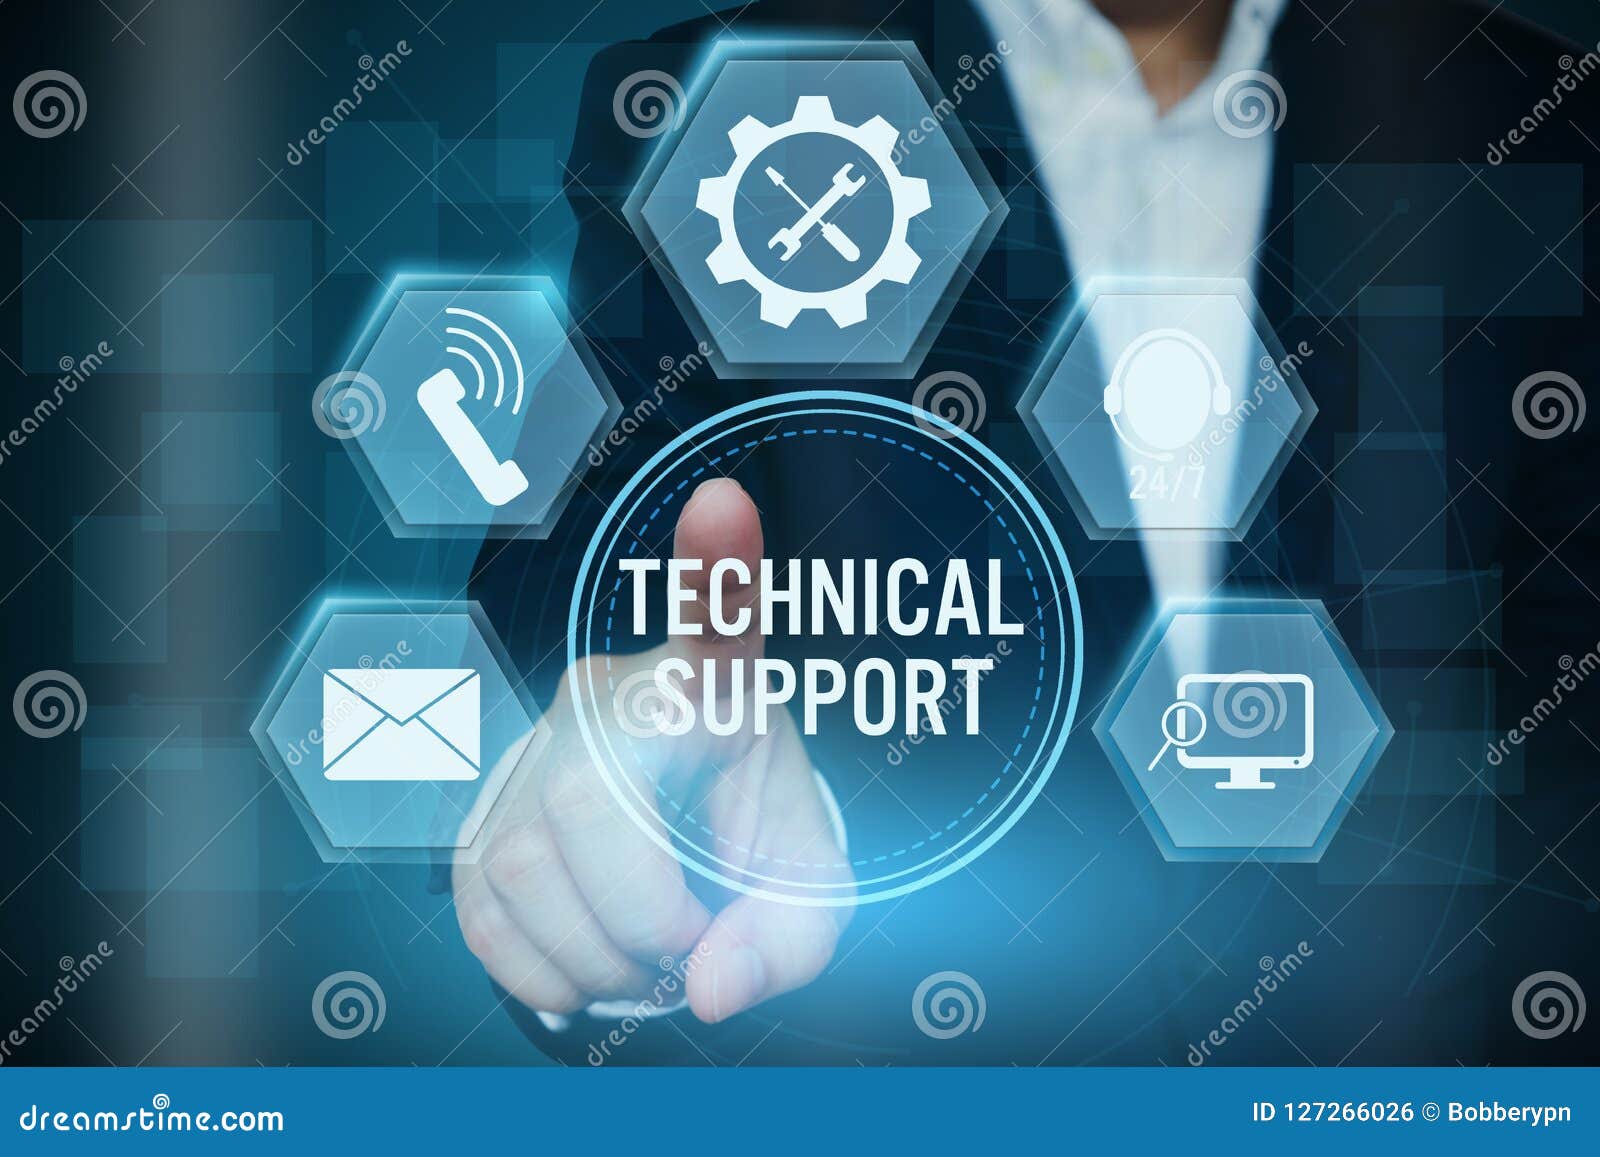 Anyway support. Техническая поддержка. Technical support. Техническая поддержка иллюстрация. Техническая поддержка картинка.